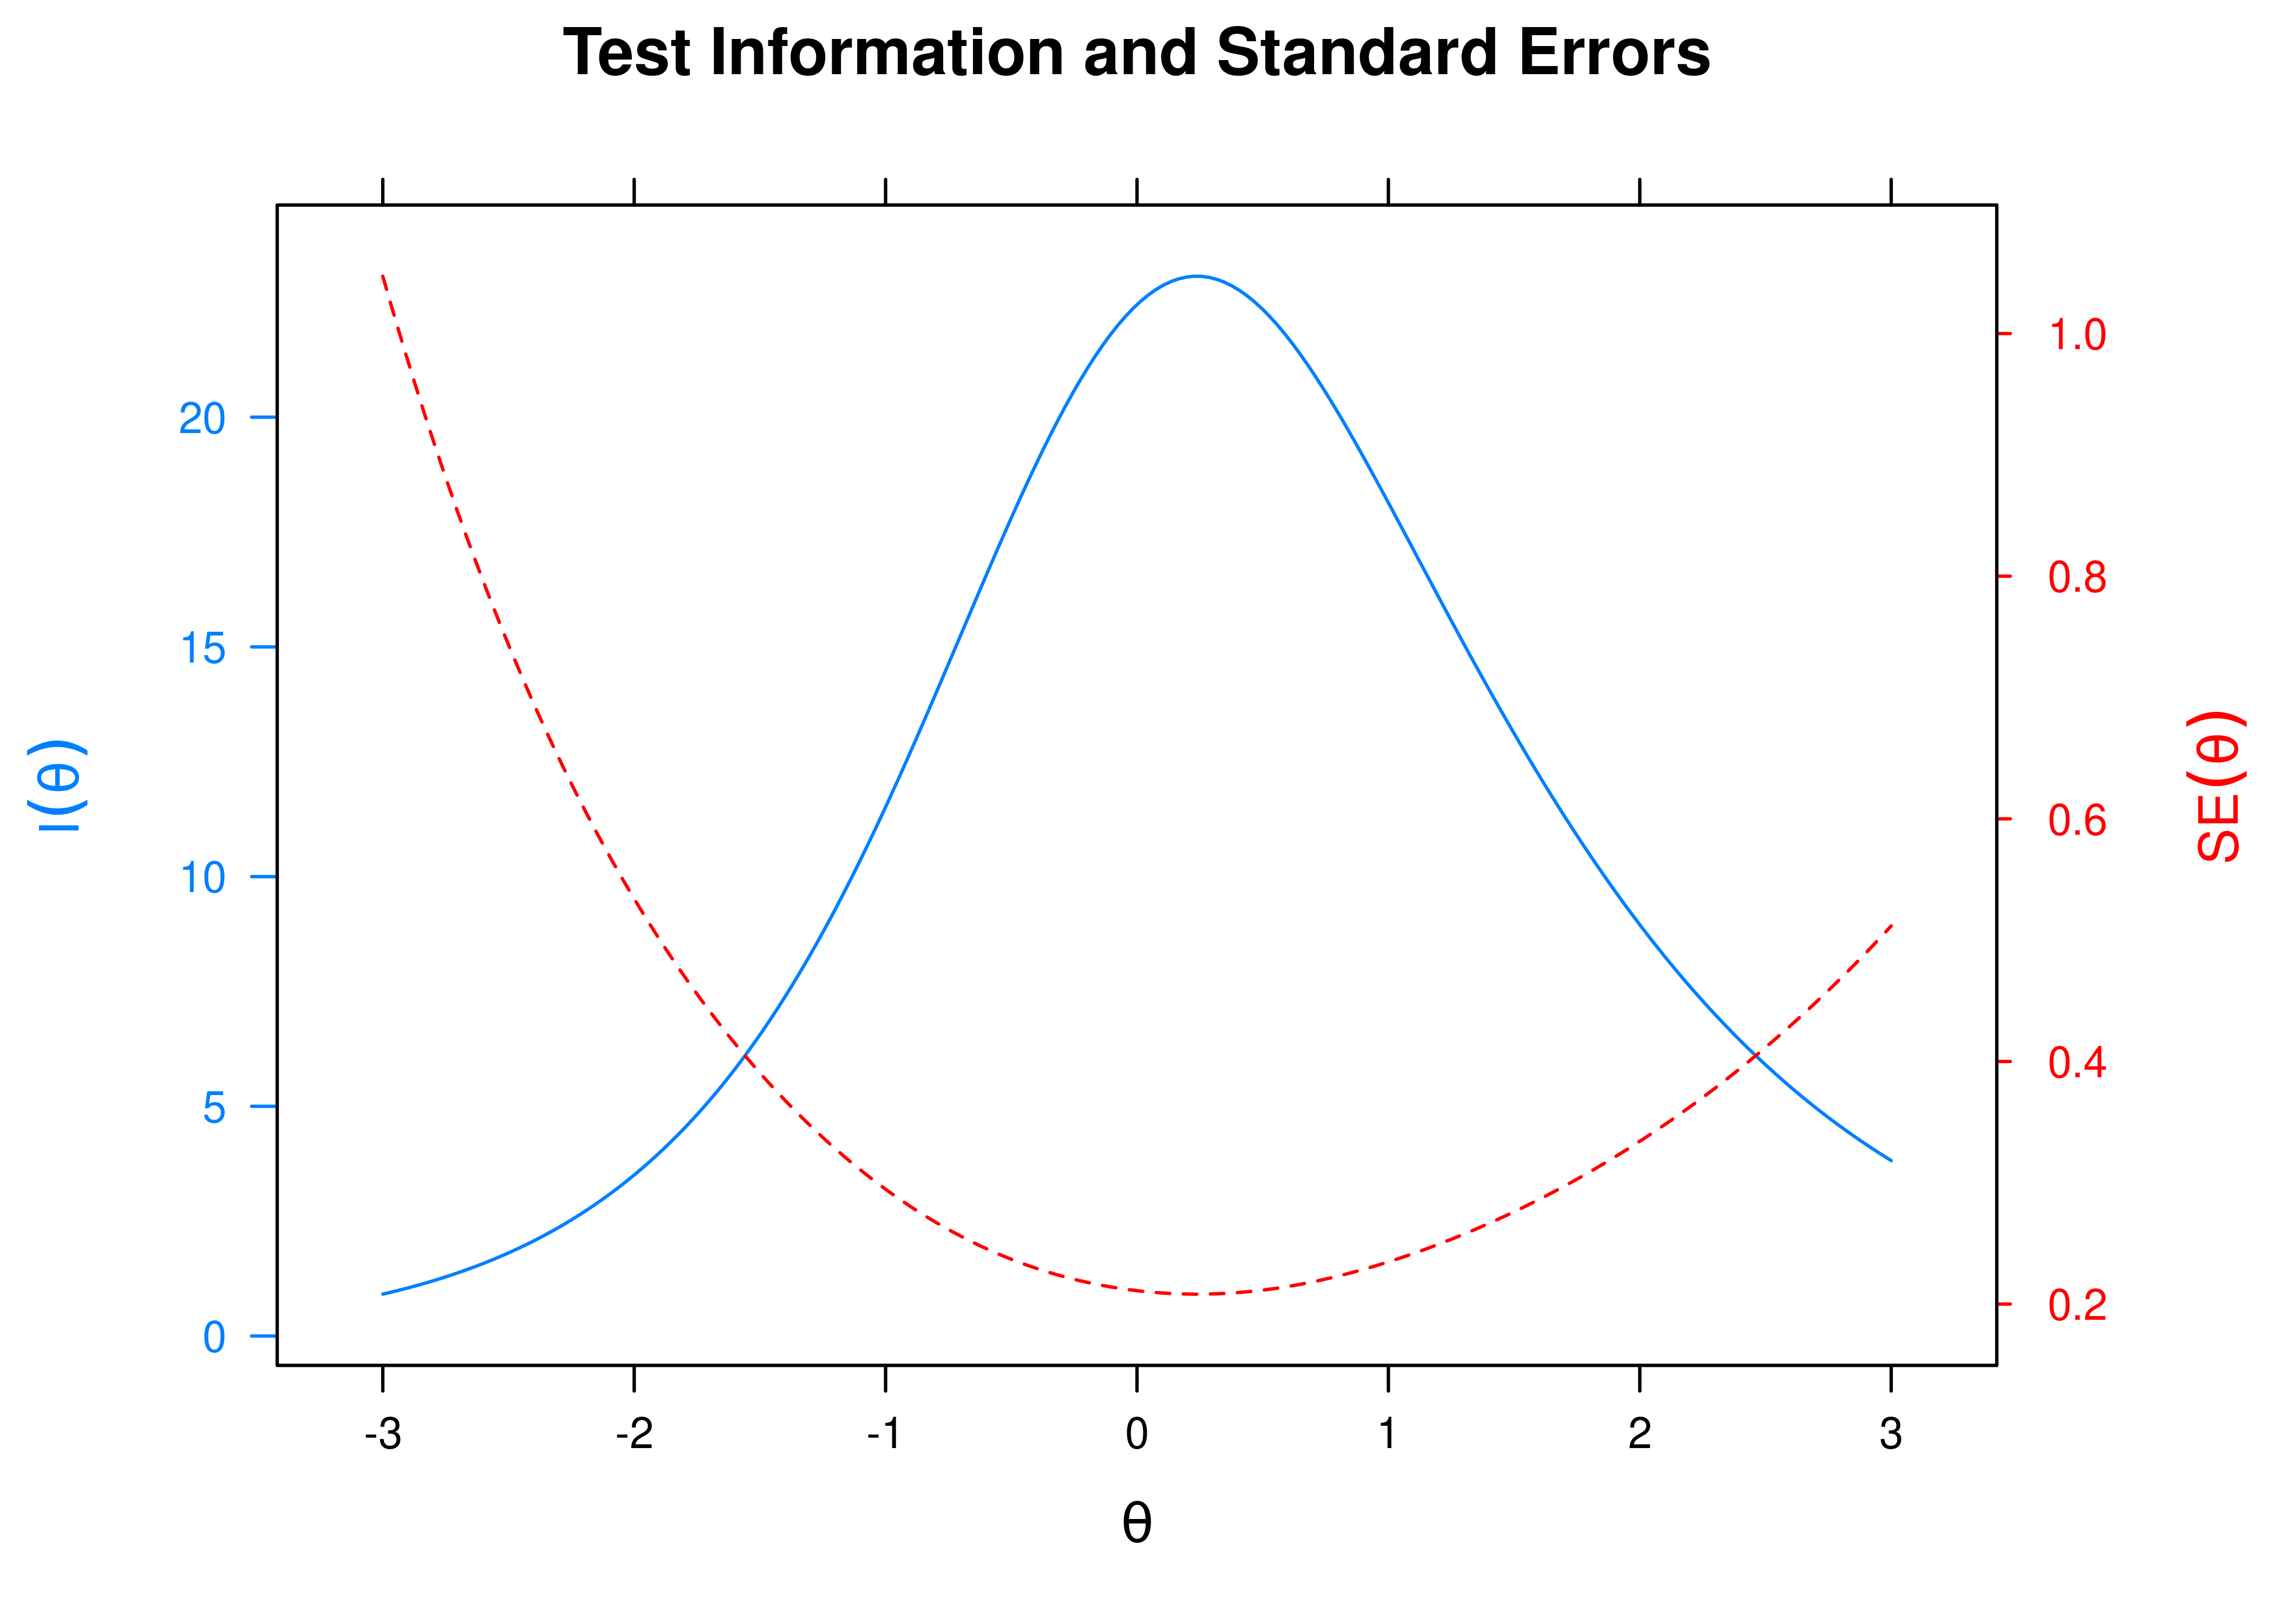 Test Information and Standard Error of Measurement.